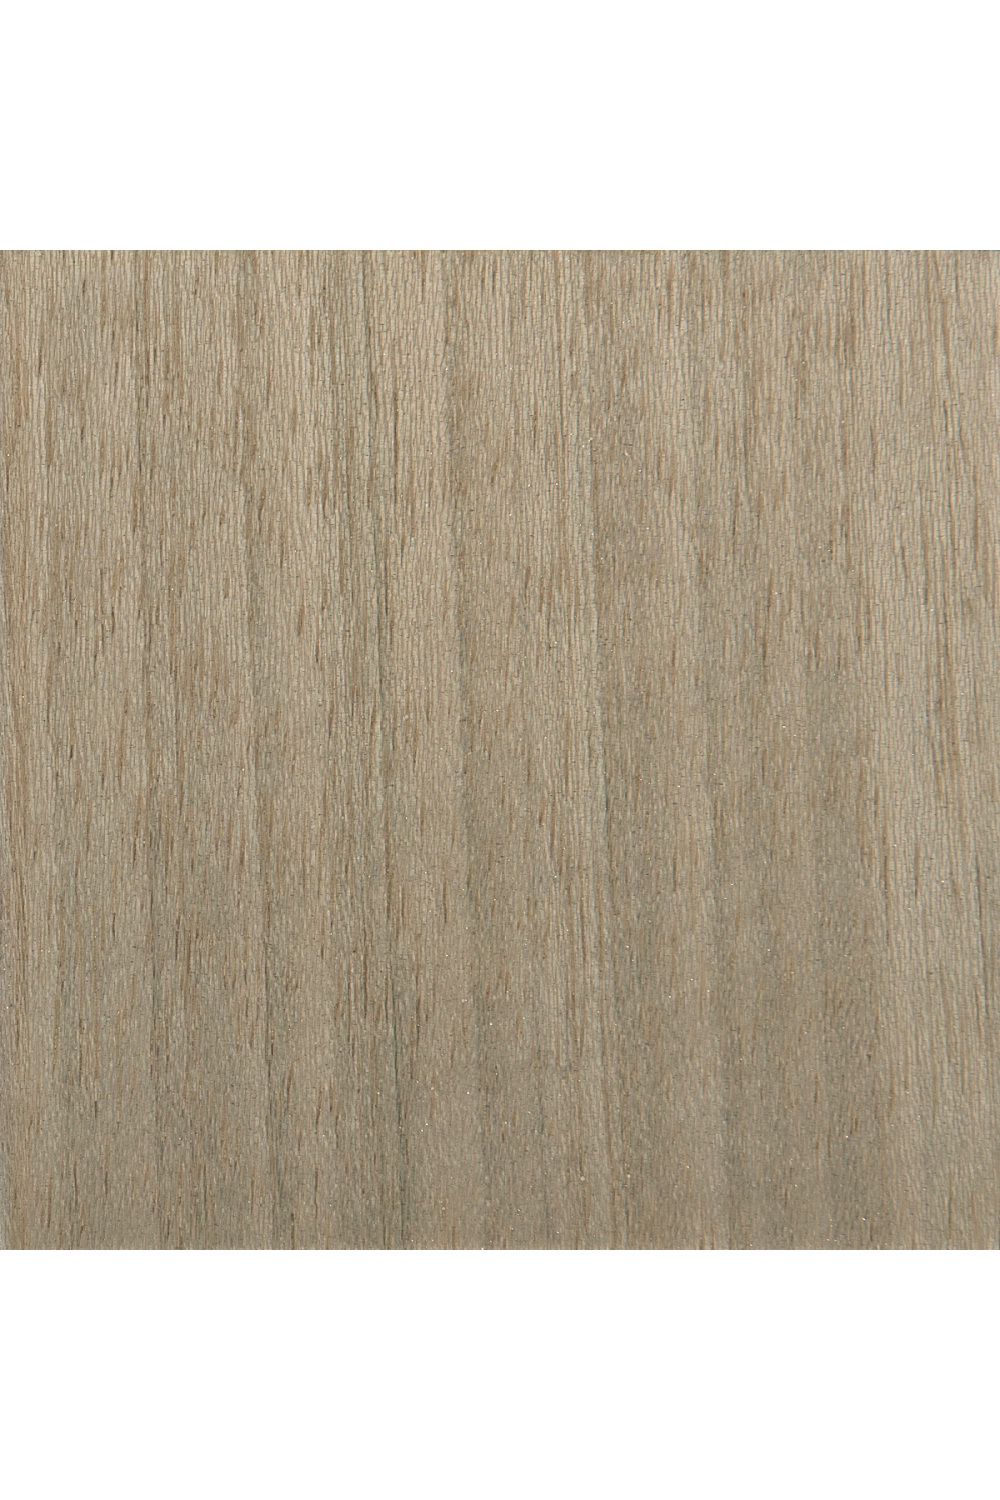 Gold Wooden Sideboard | Caracole Turn A New Leaf | Oroa.com